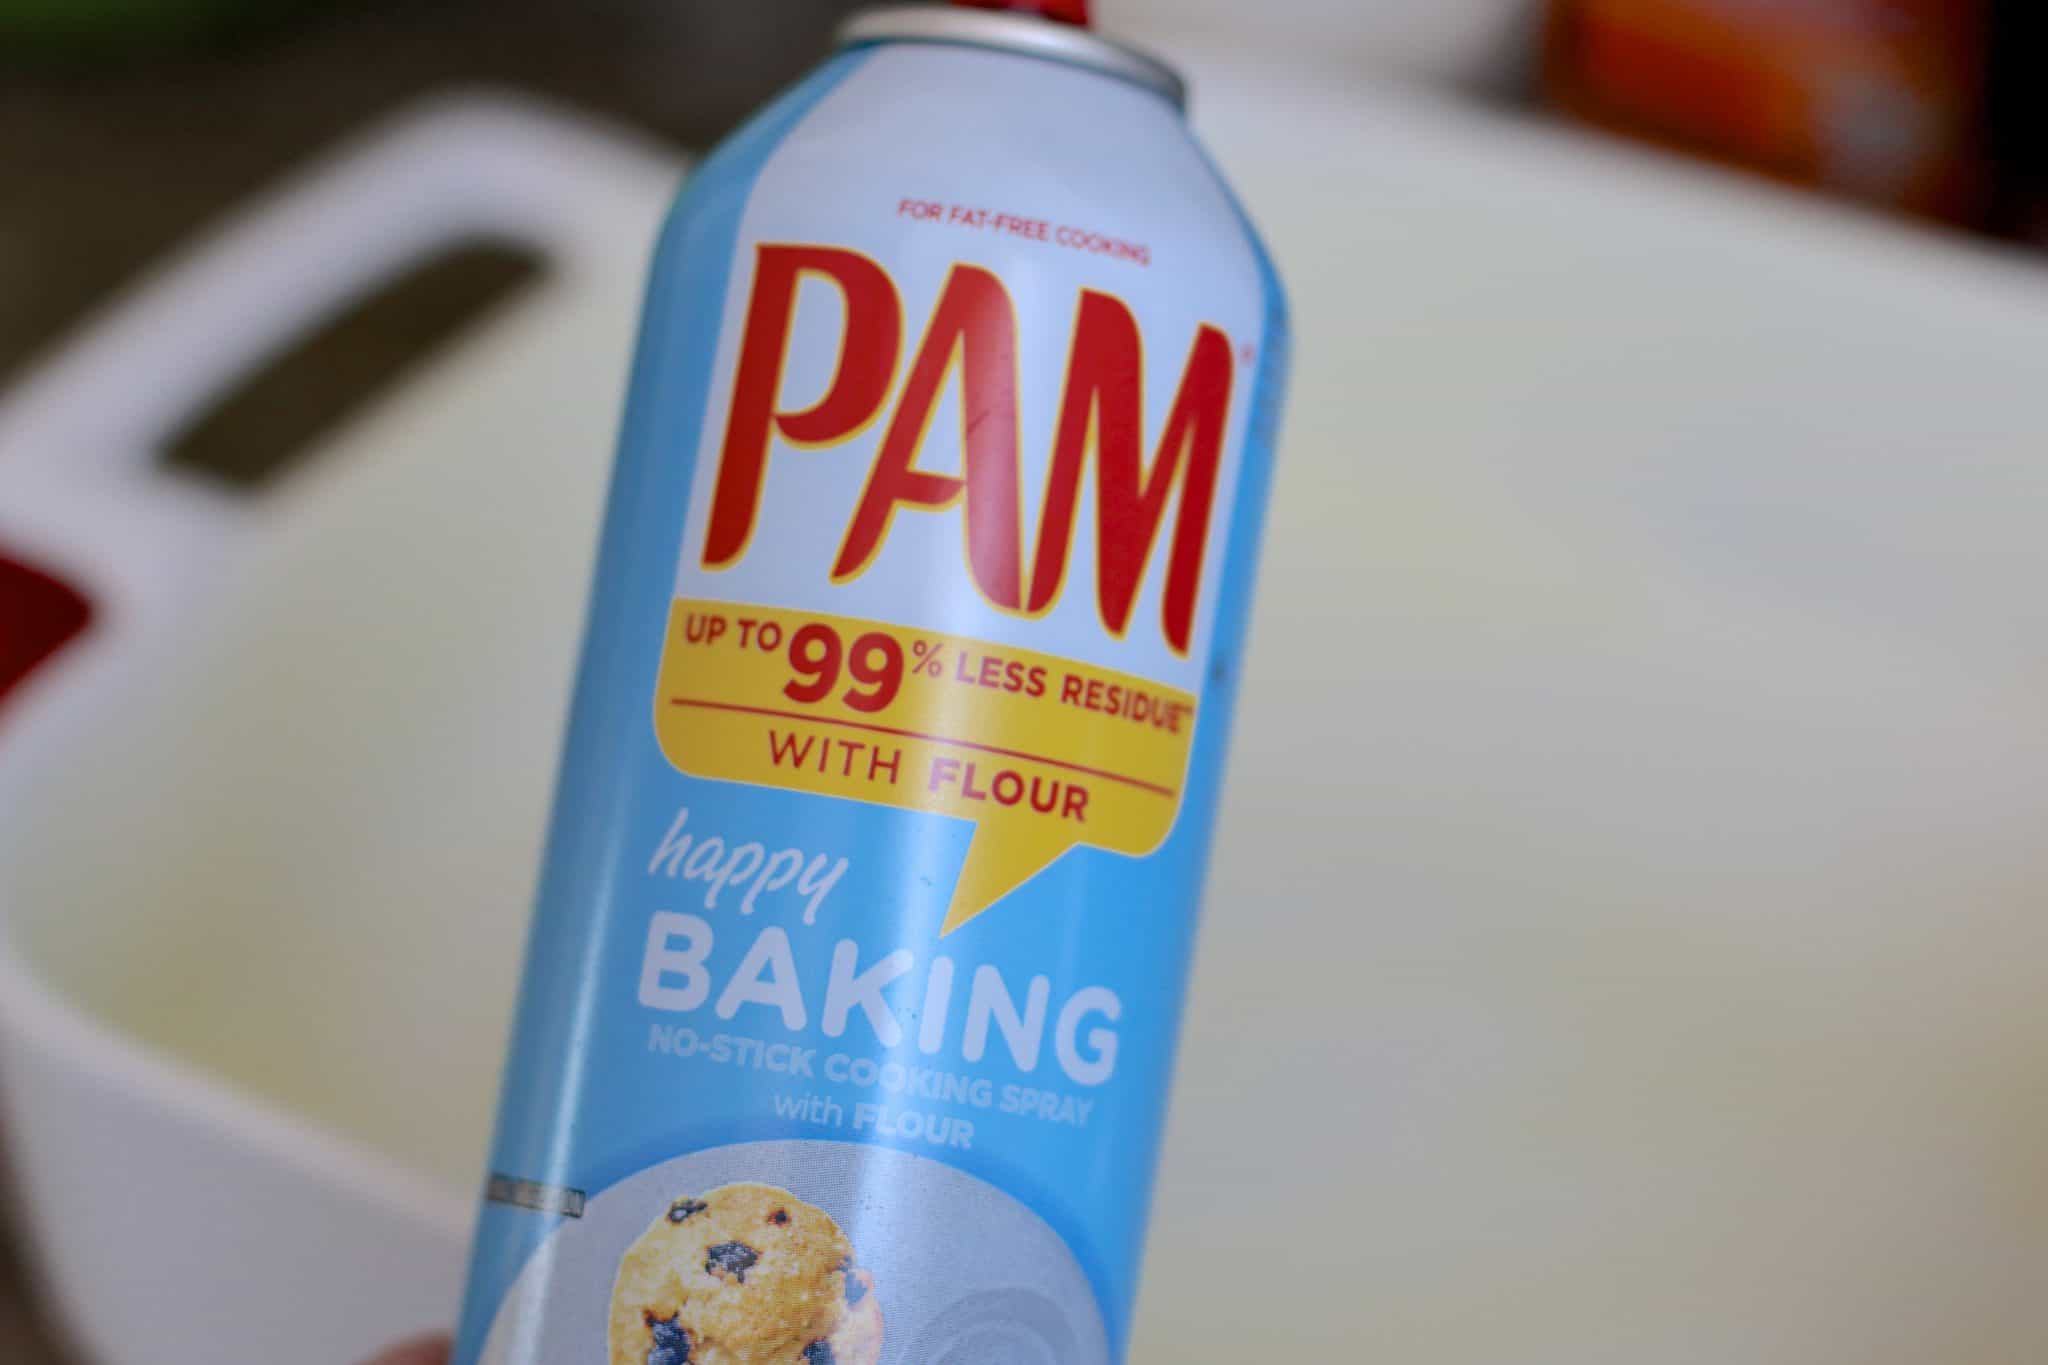 Pam baking spray with flour.